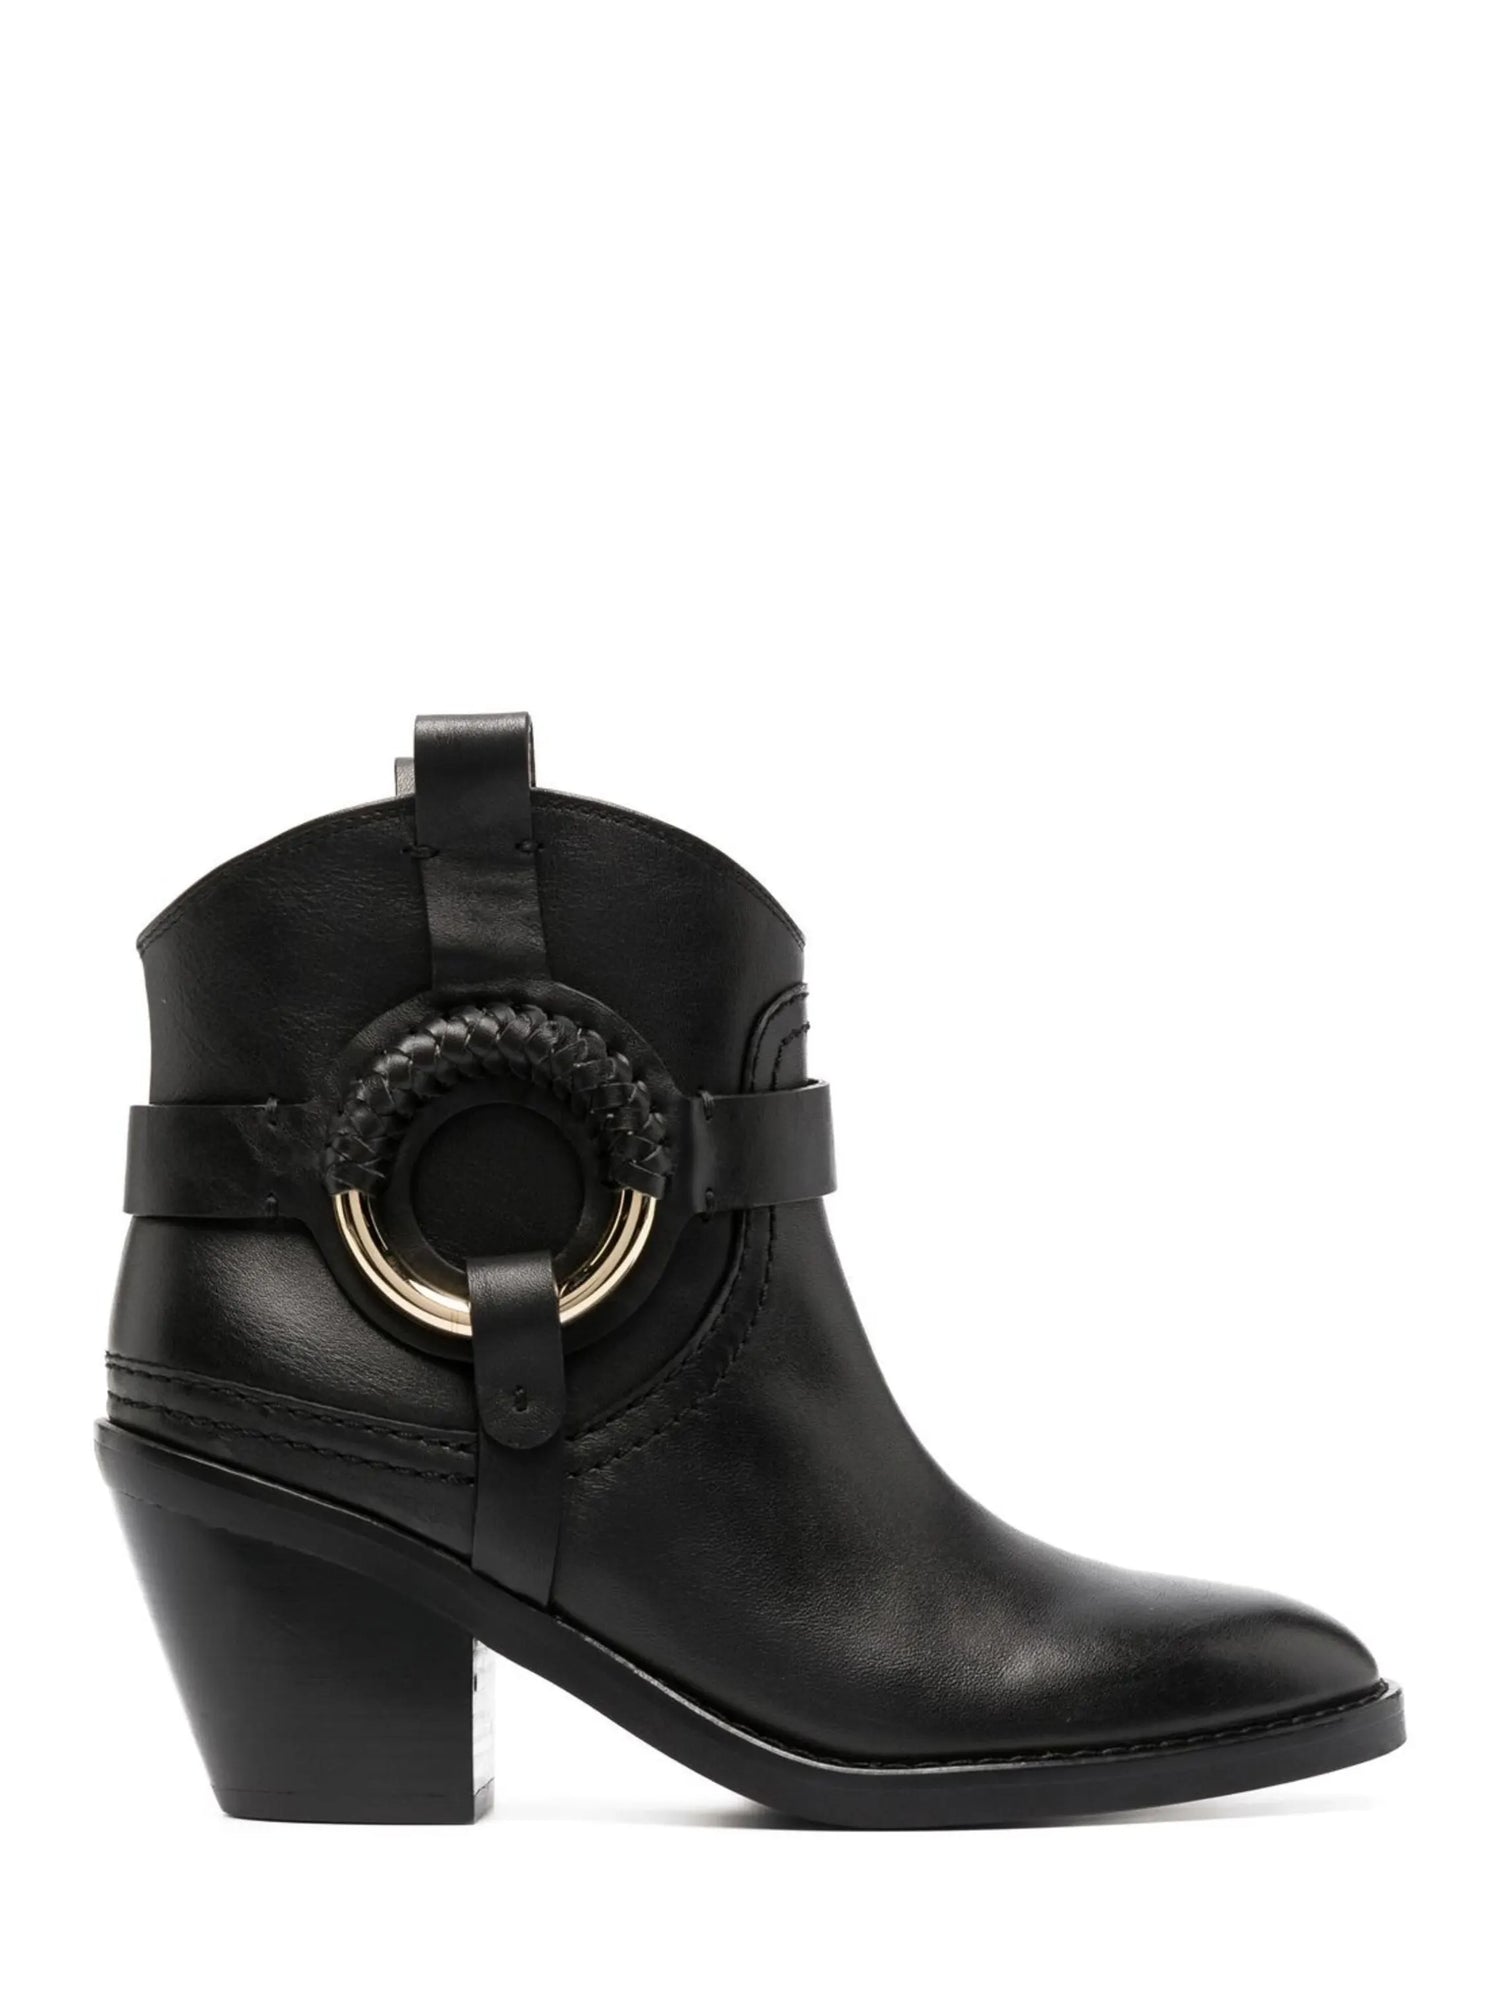 Hana boots, black